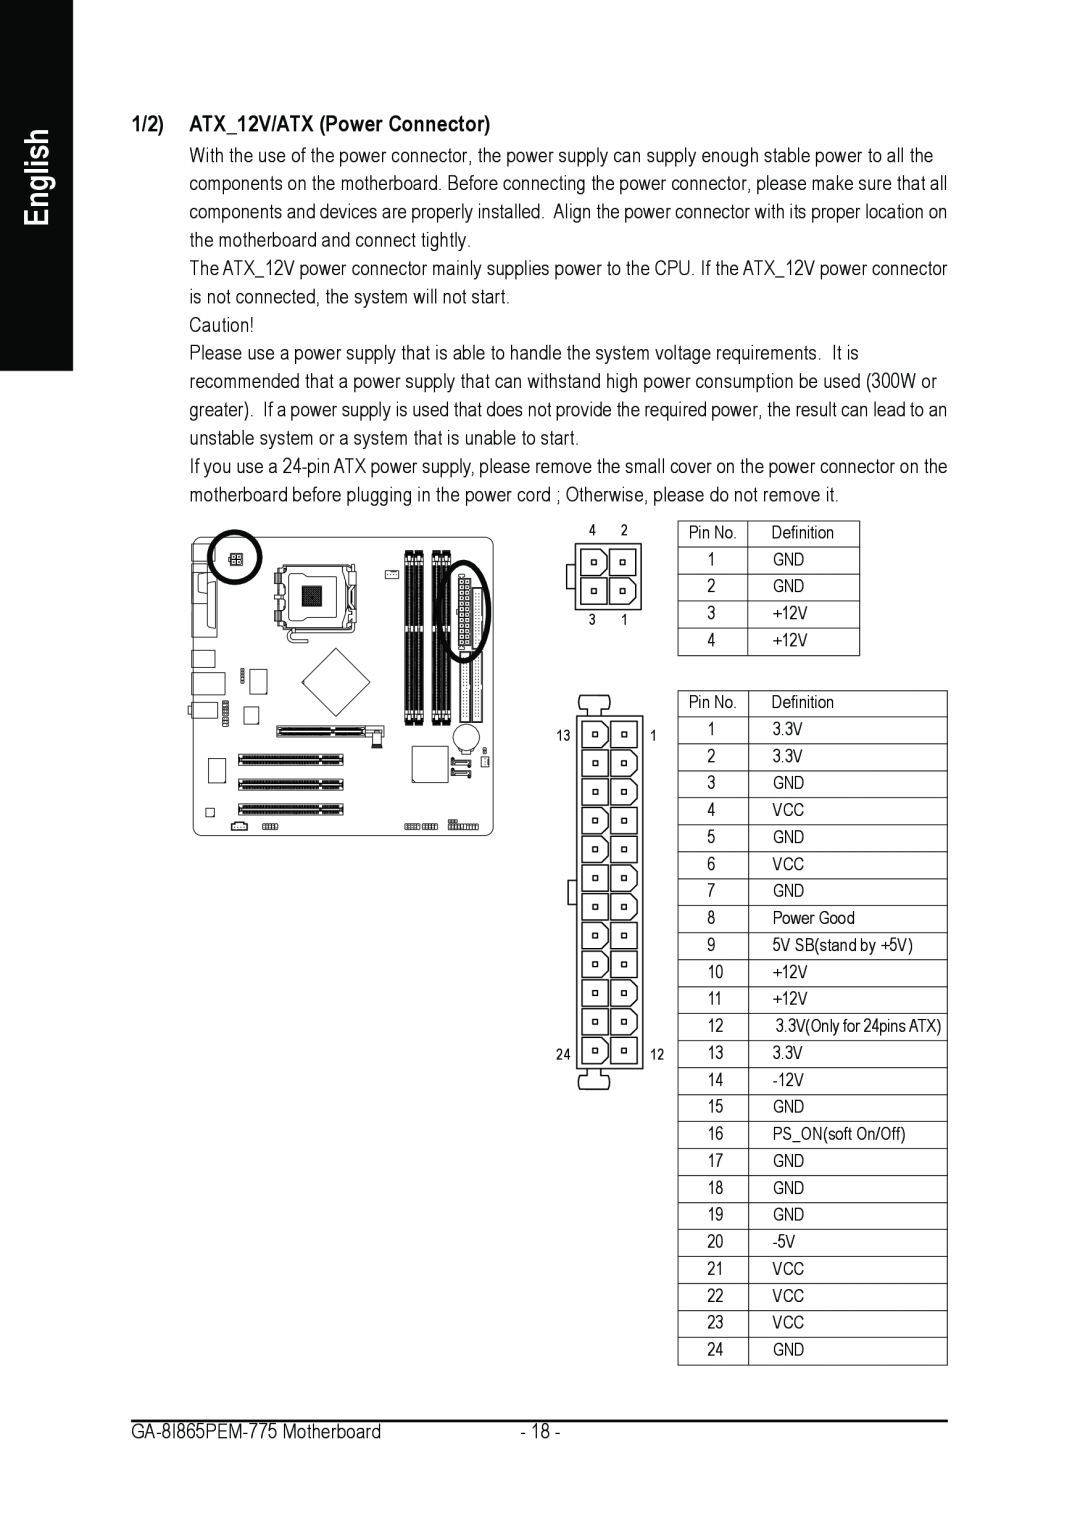 Gigabyte GA-8I865PEM-775 user manual 1/2 ATX12V/ATX Power Connector, English 